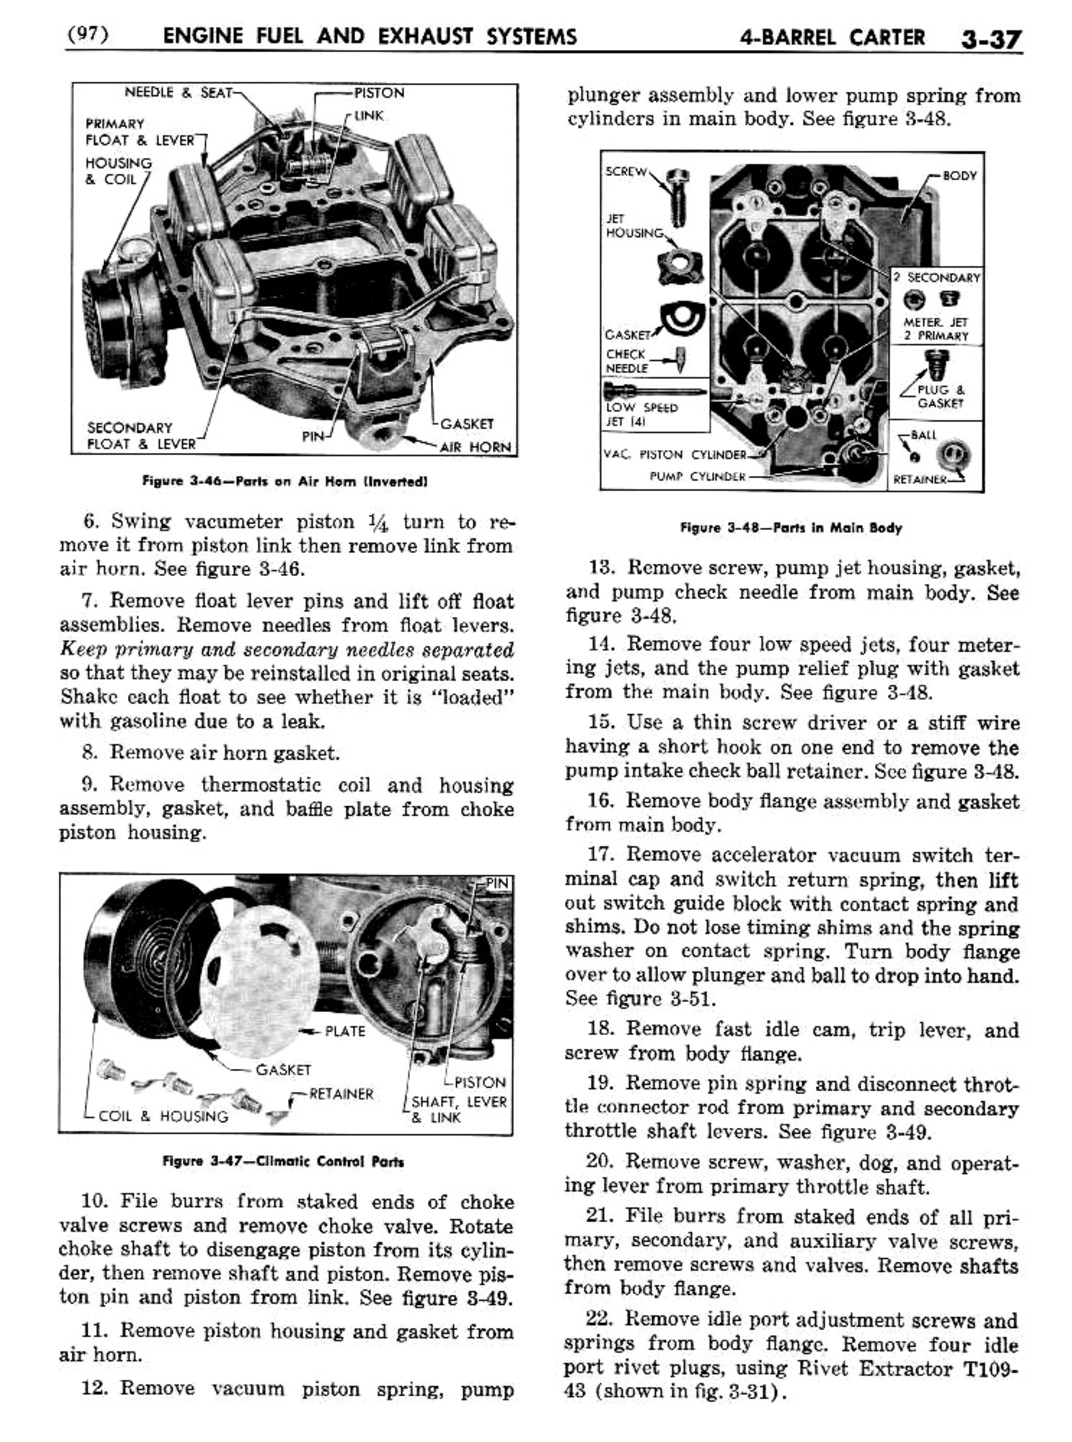 n_04 1956 Buick Shop Manual - Engine Fuel & Exhaust-037-037.jpg